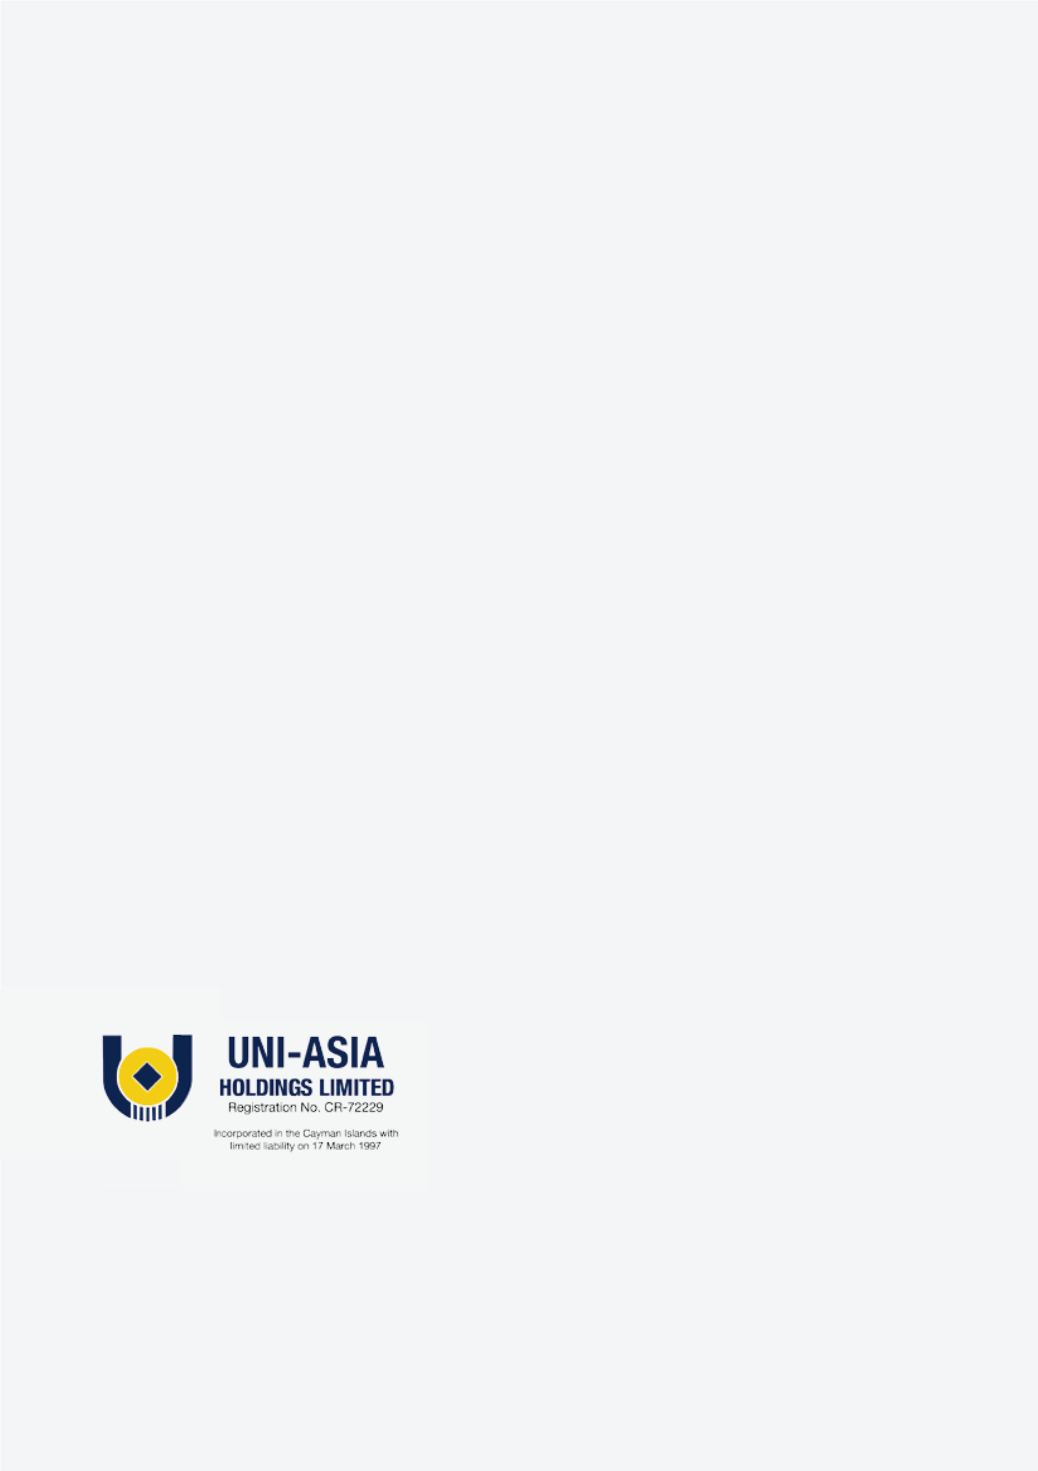 Uniasia login page